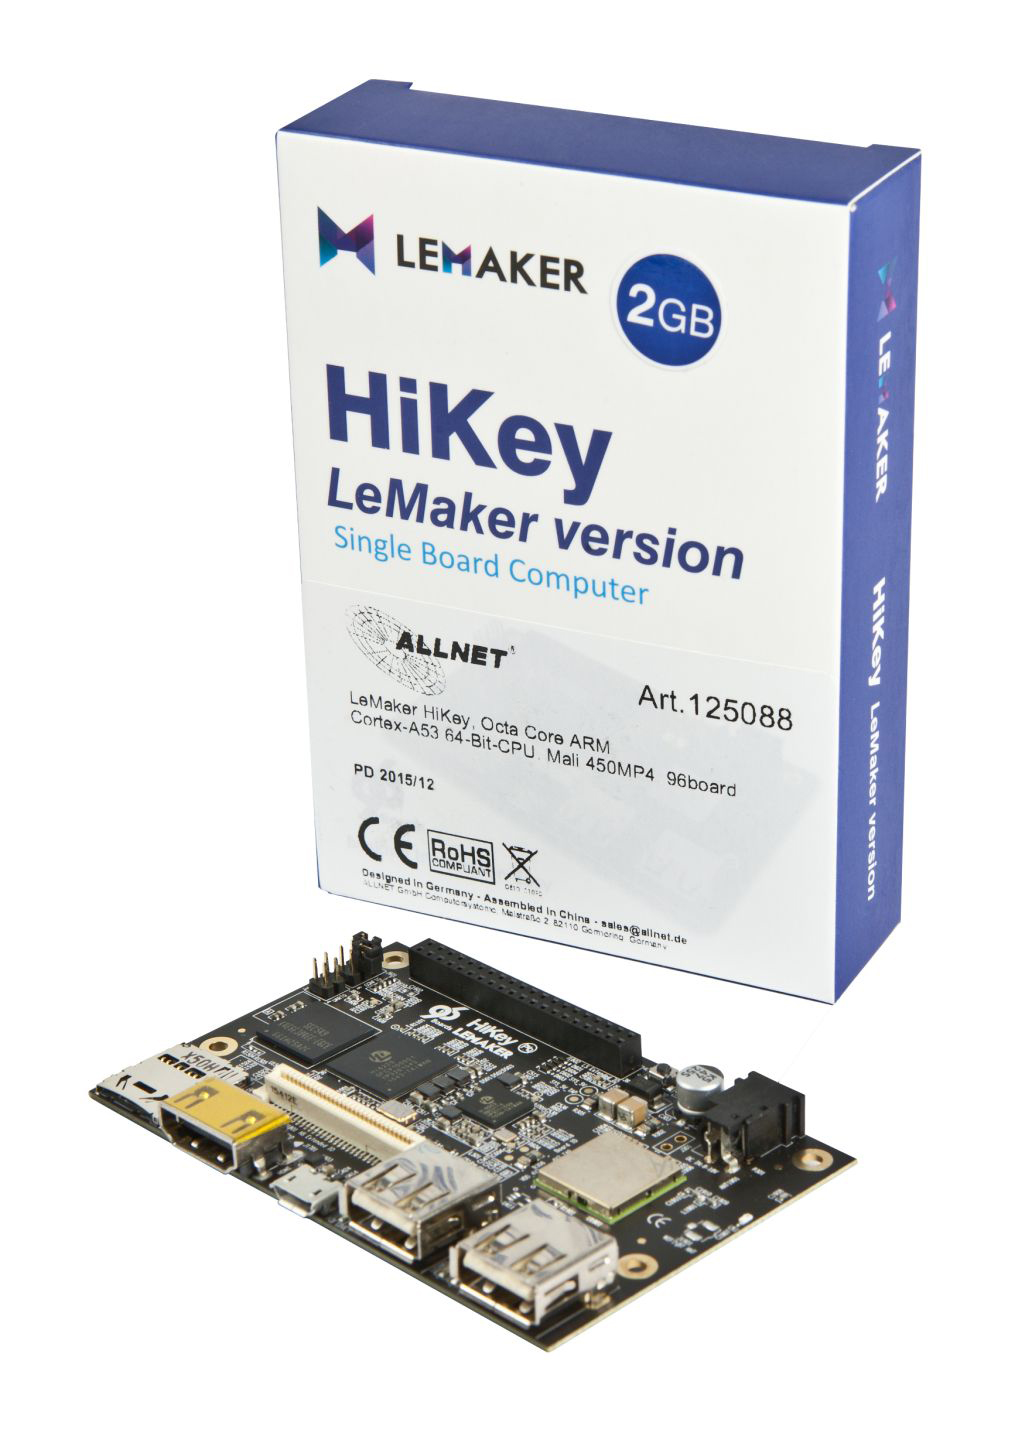 LeMaker HiKey 2GB, Octa Core ARM Cortex-A53 64-Bit-CPU, Mali 450MP4, 96board